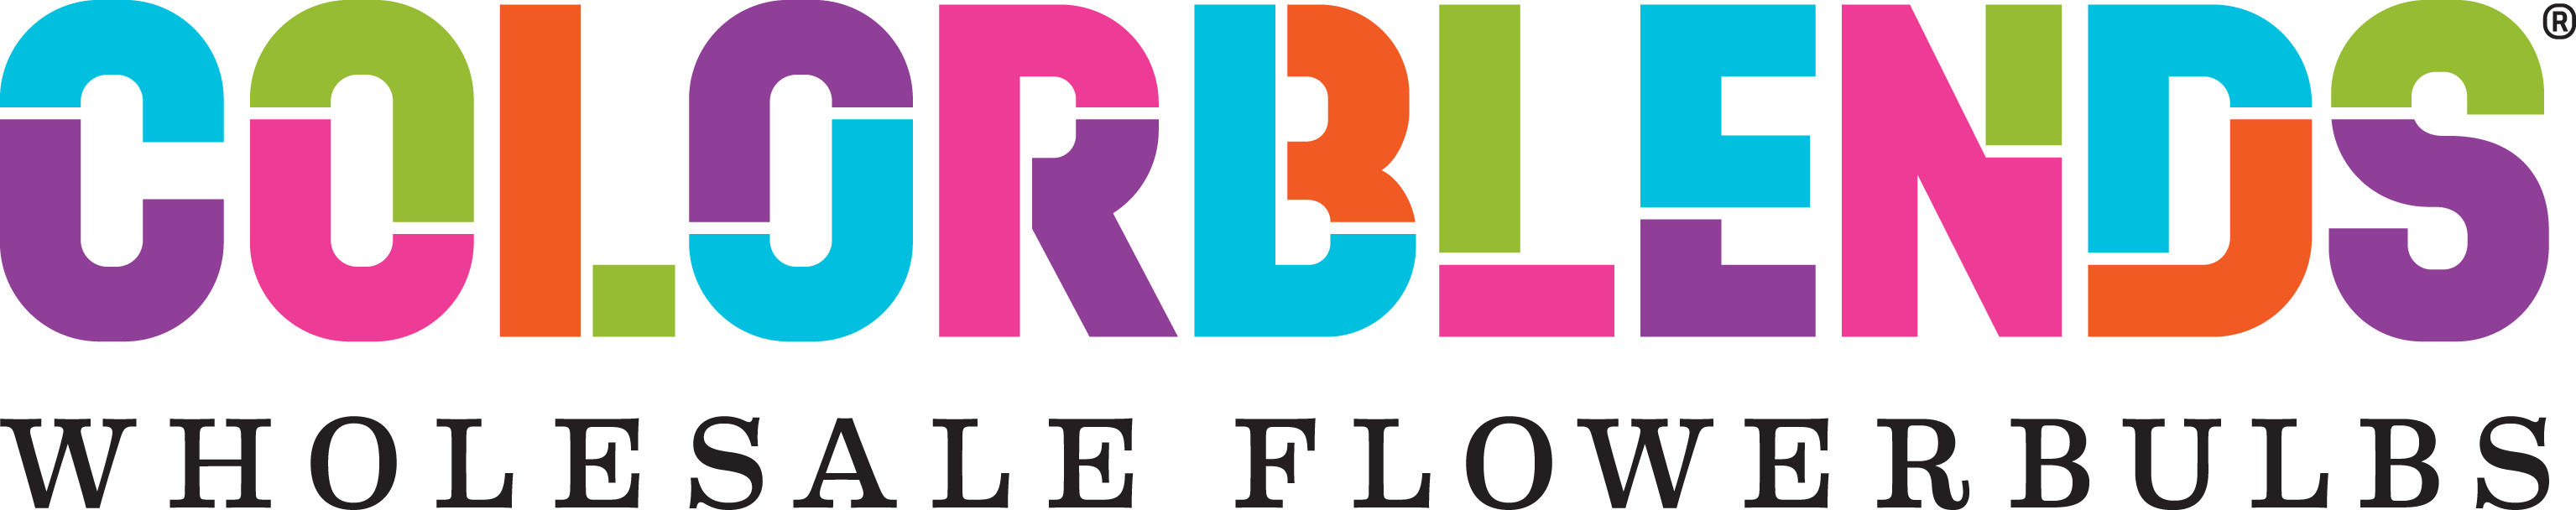 Colorblends-logo